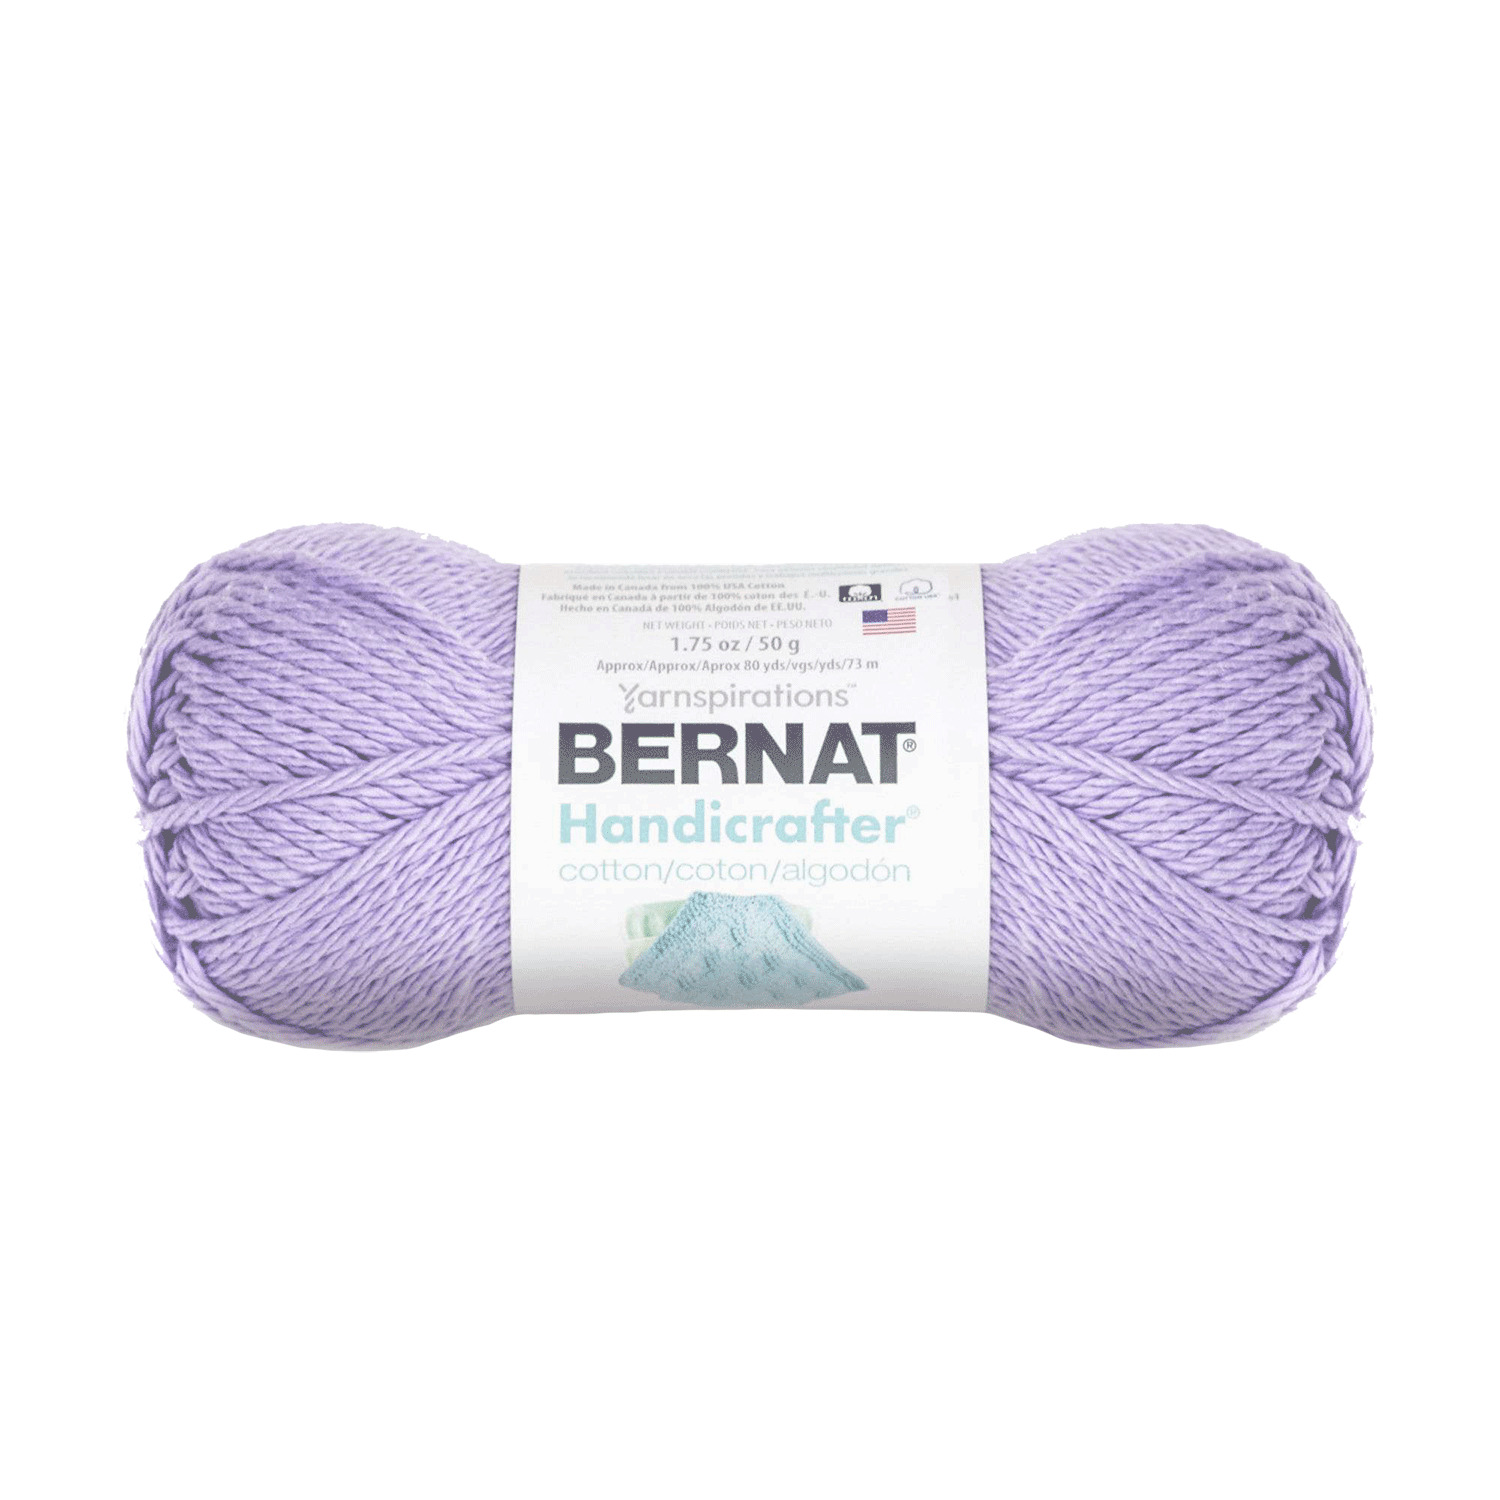 Bernat Handicrafter - Cotton yarn, Soft violet